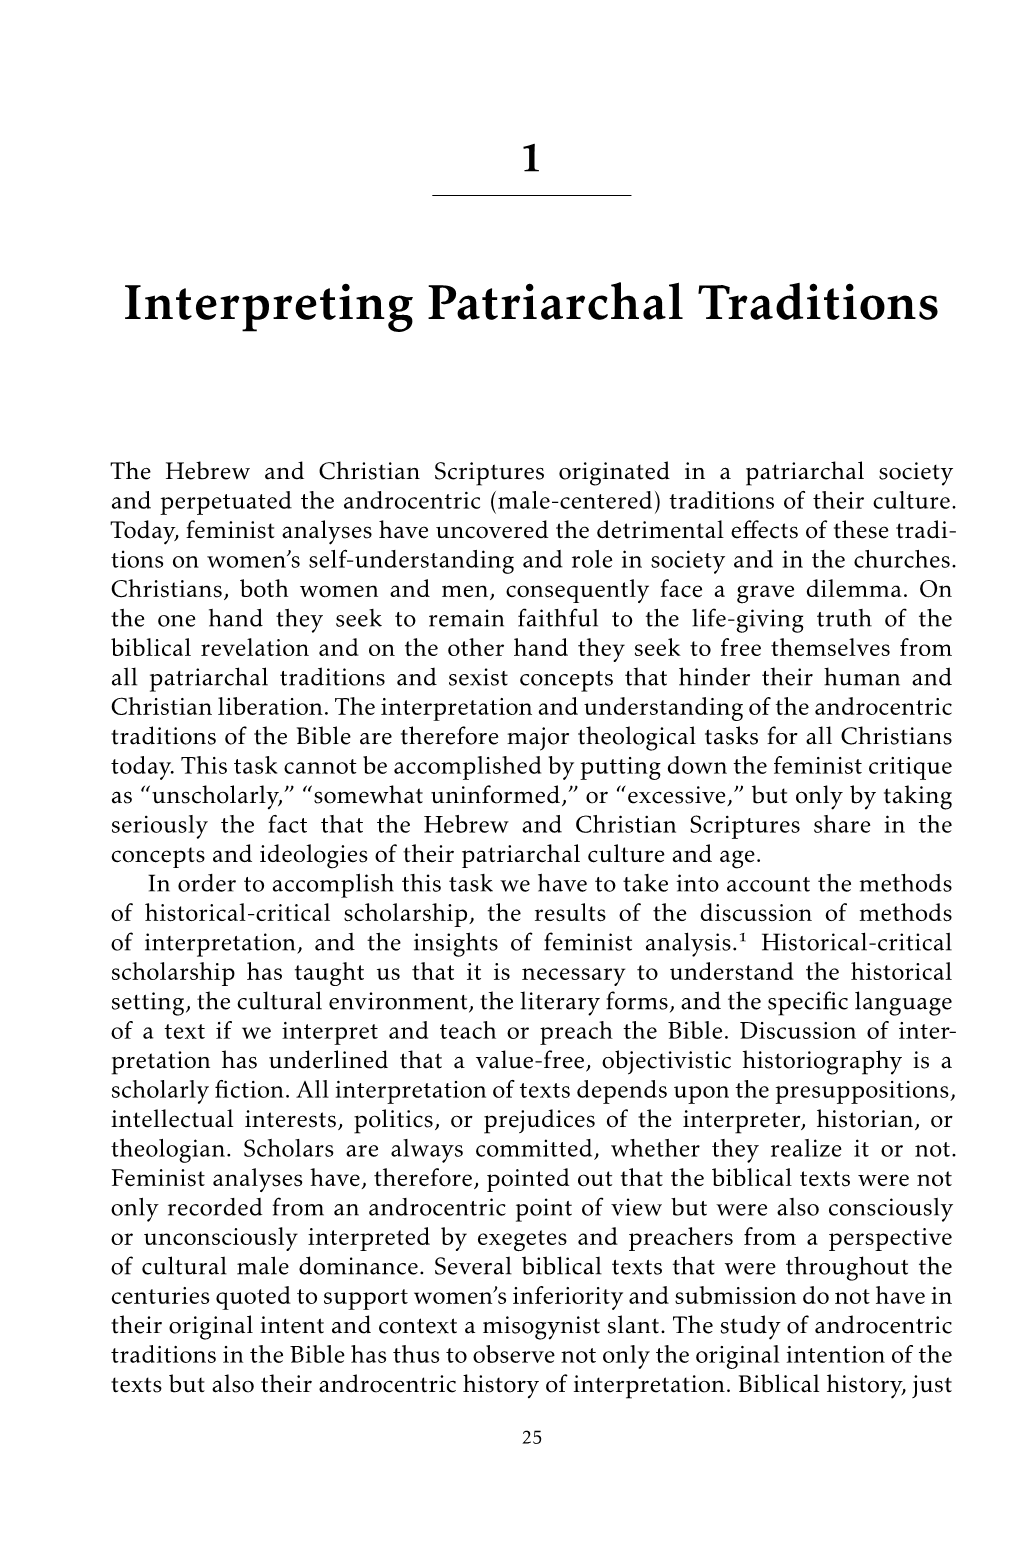 Interpreting Patriarchal Traditions